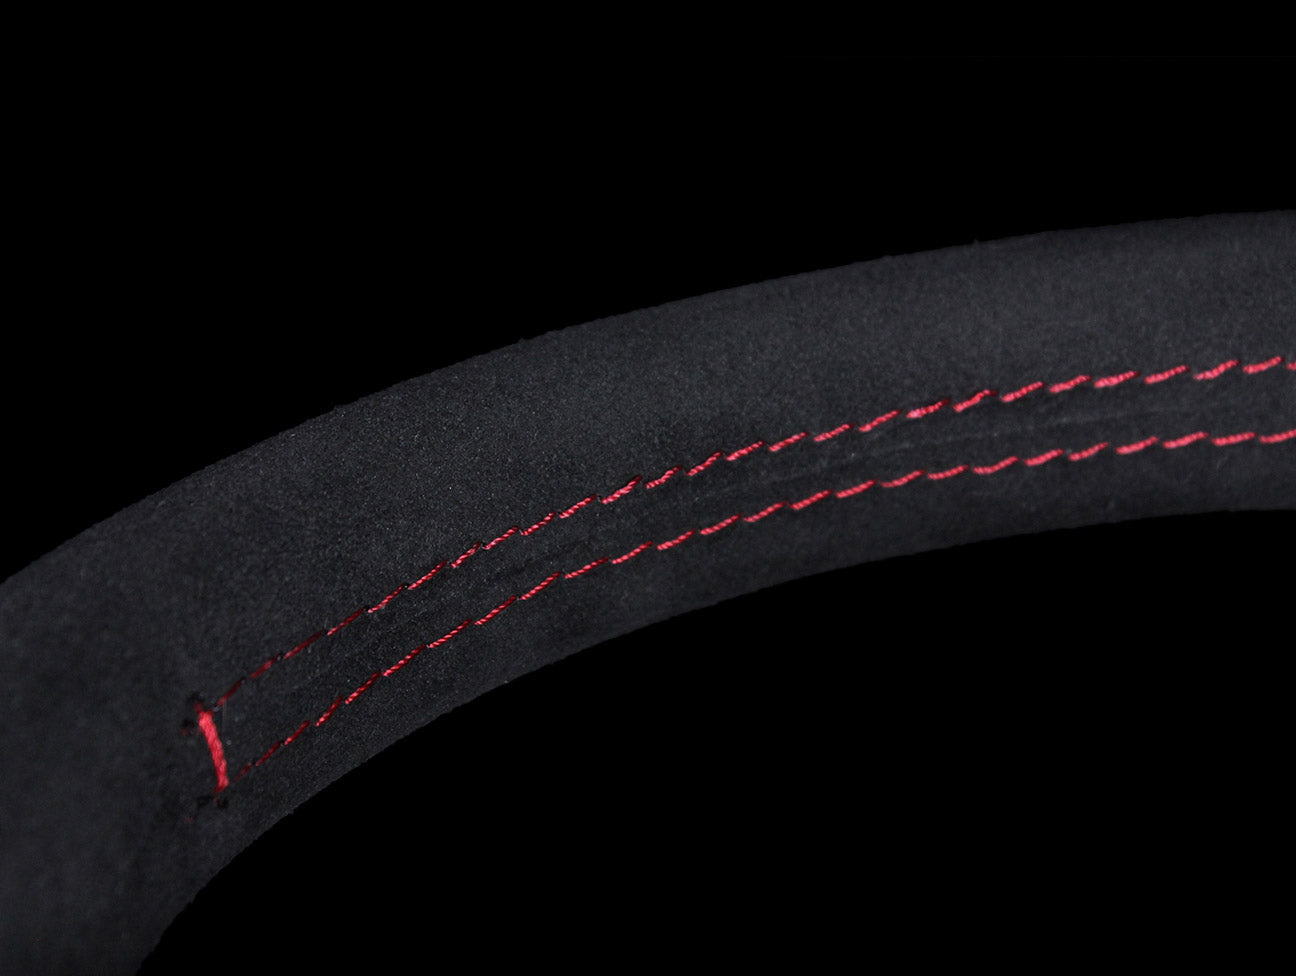 MOMO Montecarlo Steering Wheel - Black Alcantara Red Stitching Black S